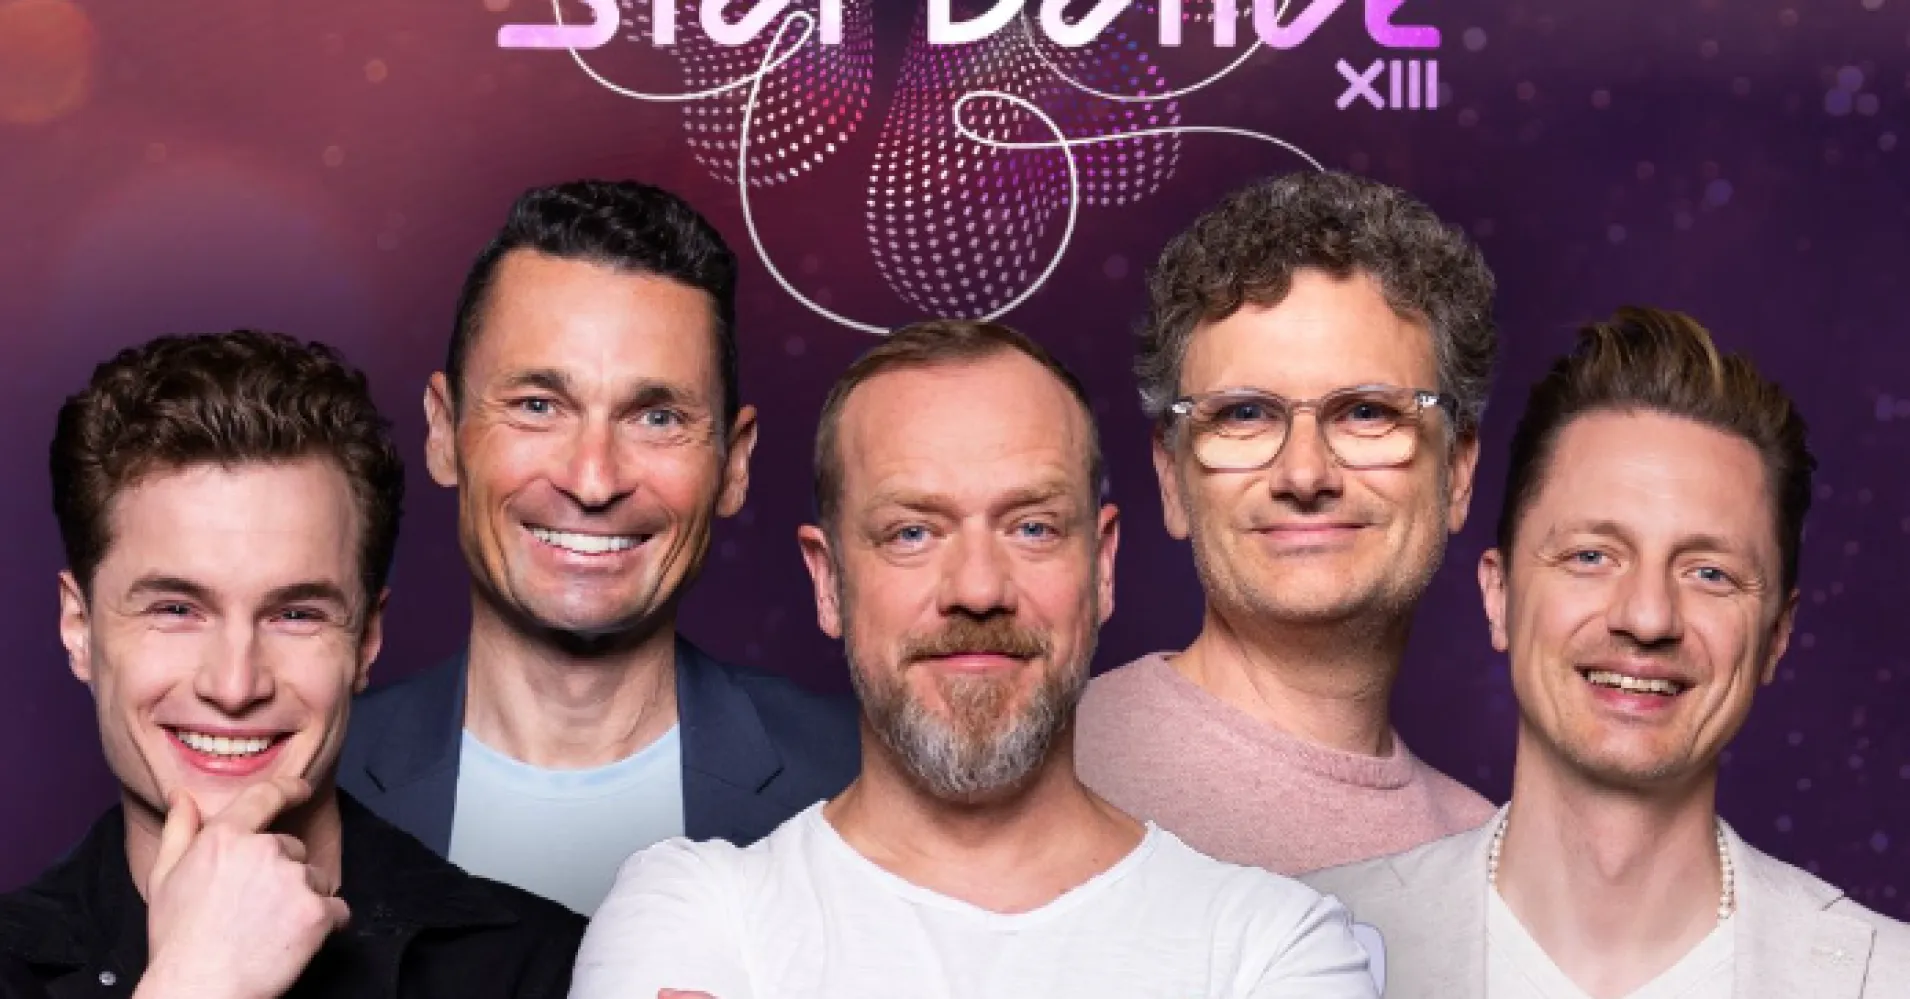 New dancers for StarDance: writer Patrik Hartl, actor Oskar Hes or singer Ondřej Ruml